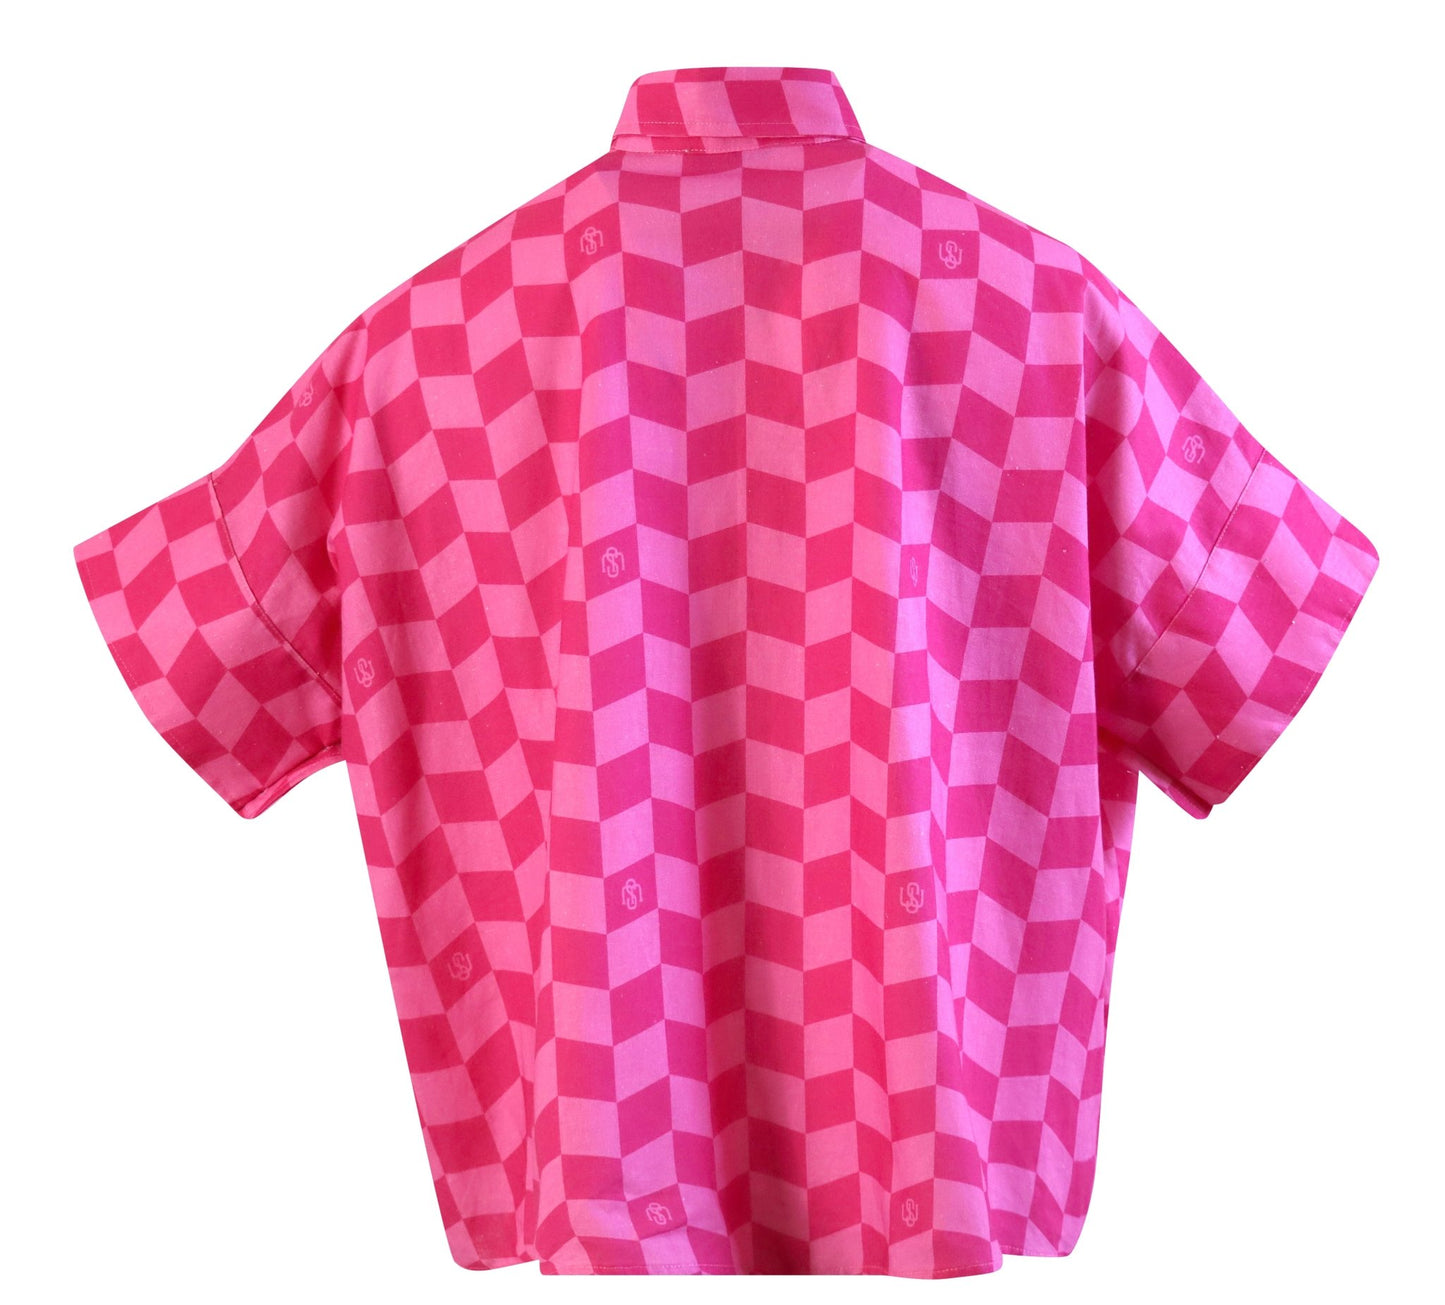 Tāhuna shirt - Pink Geometric - Sweepstake Winners™